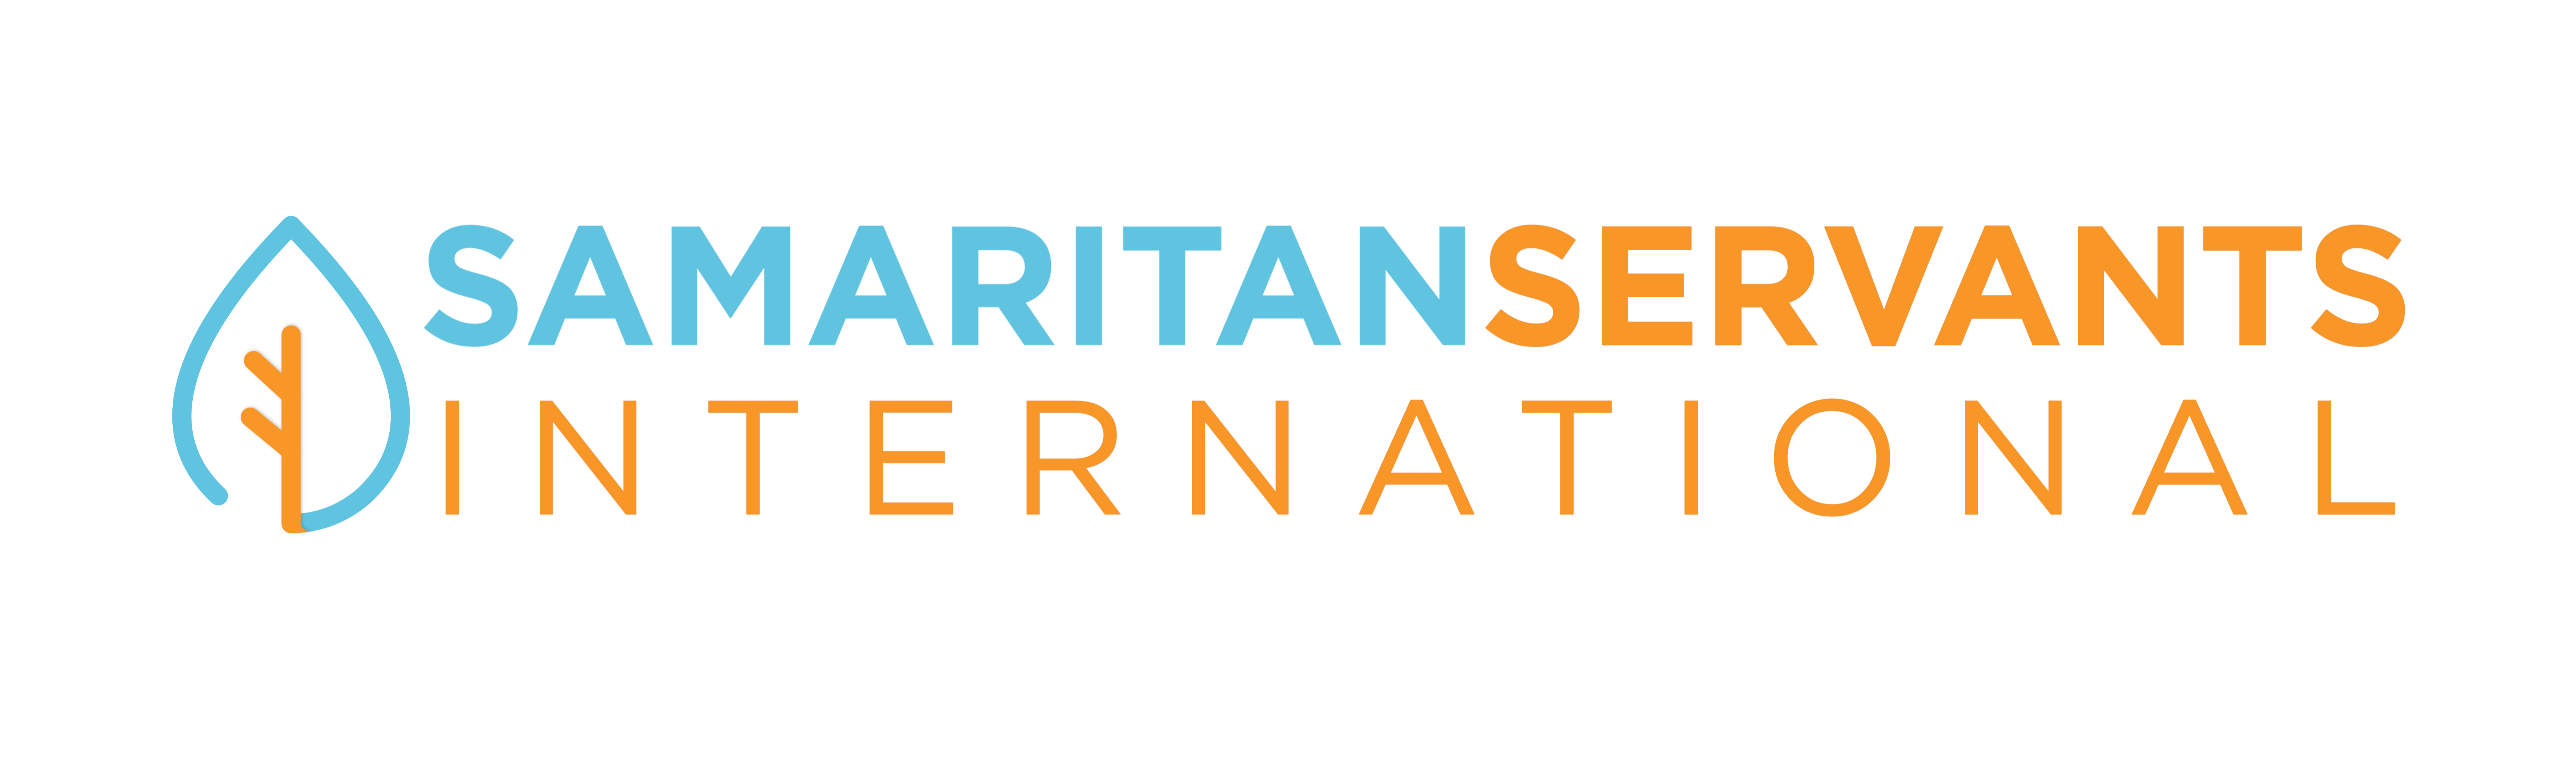 Samaritan Servants International logo